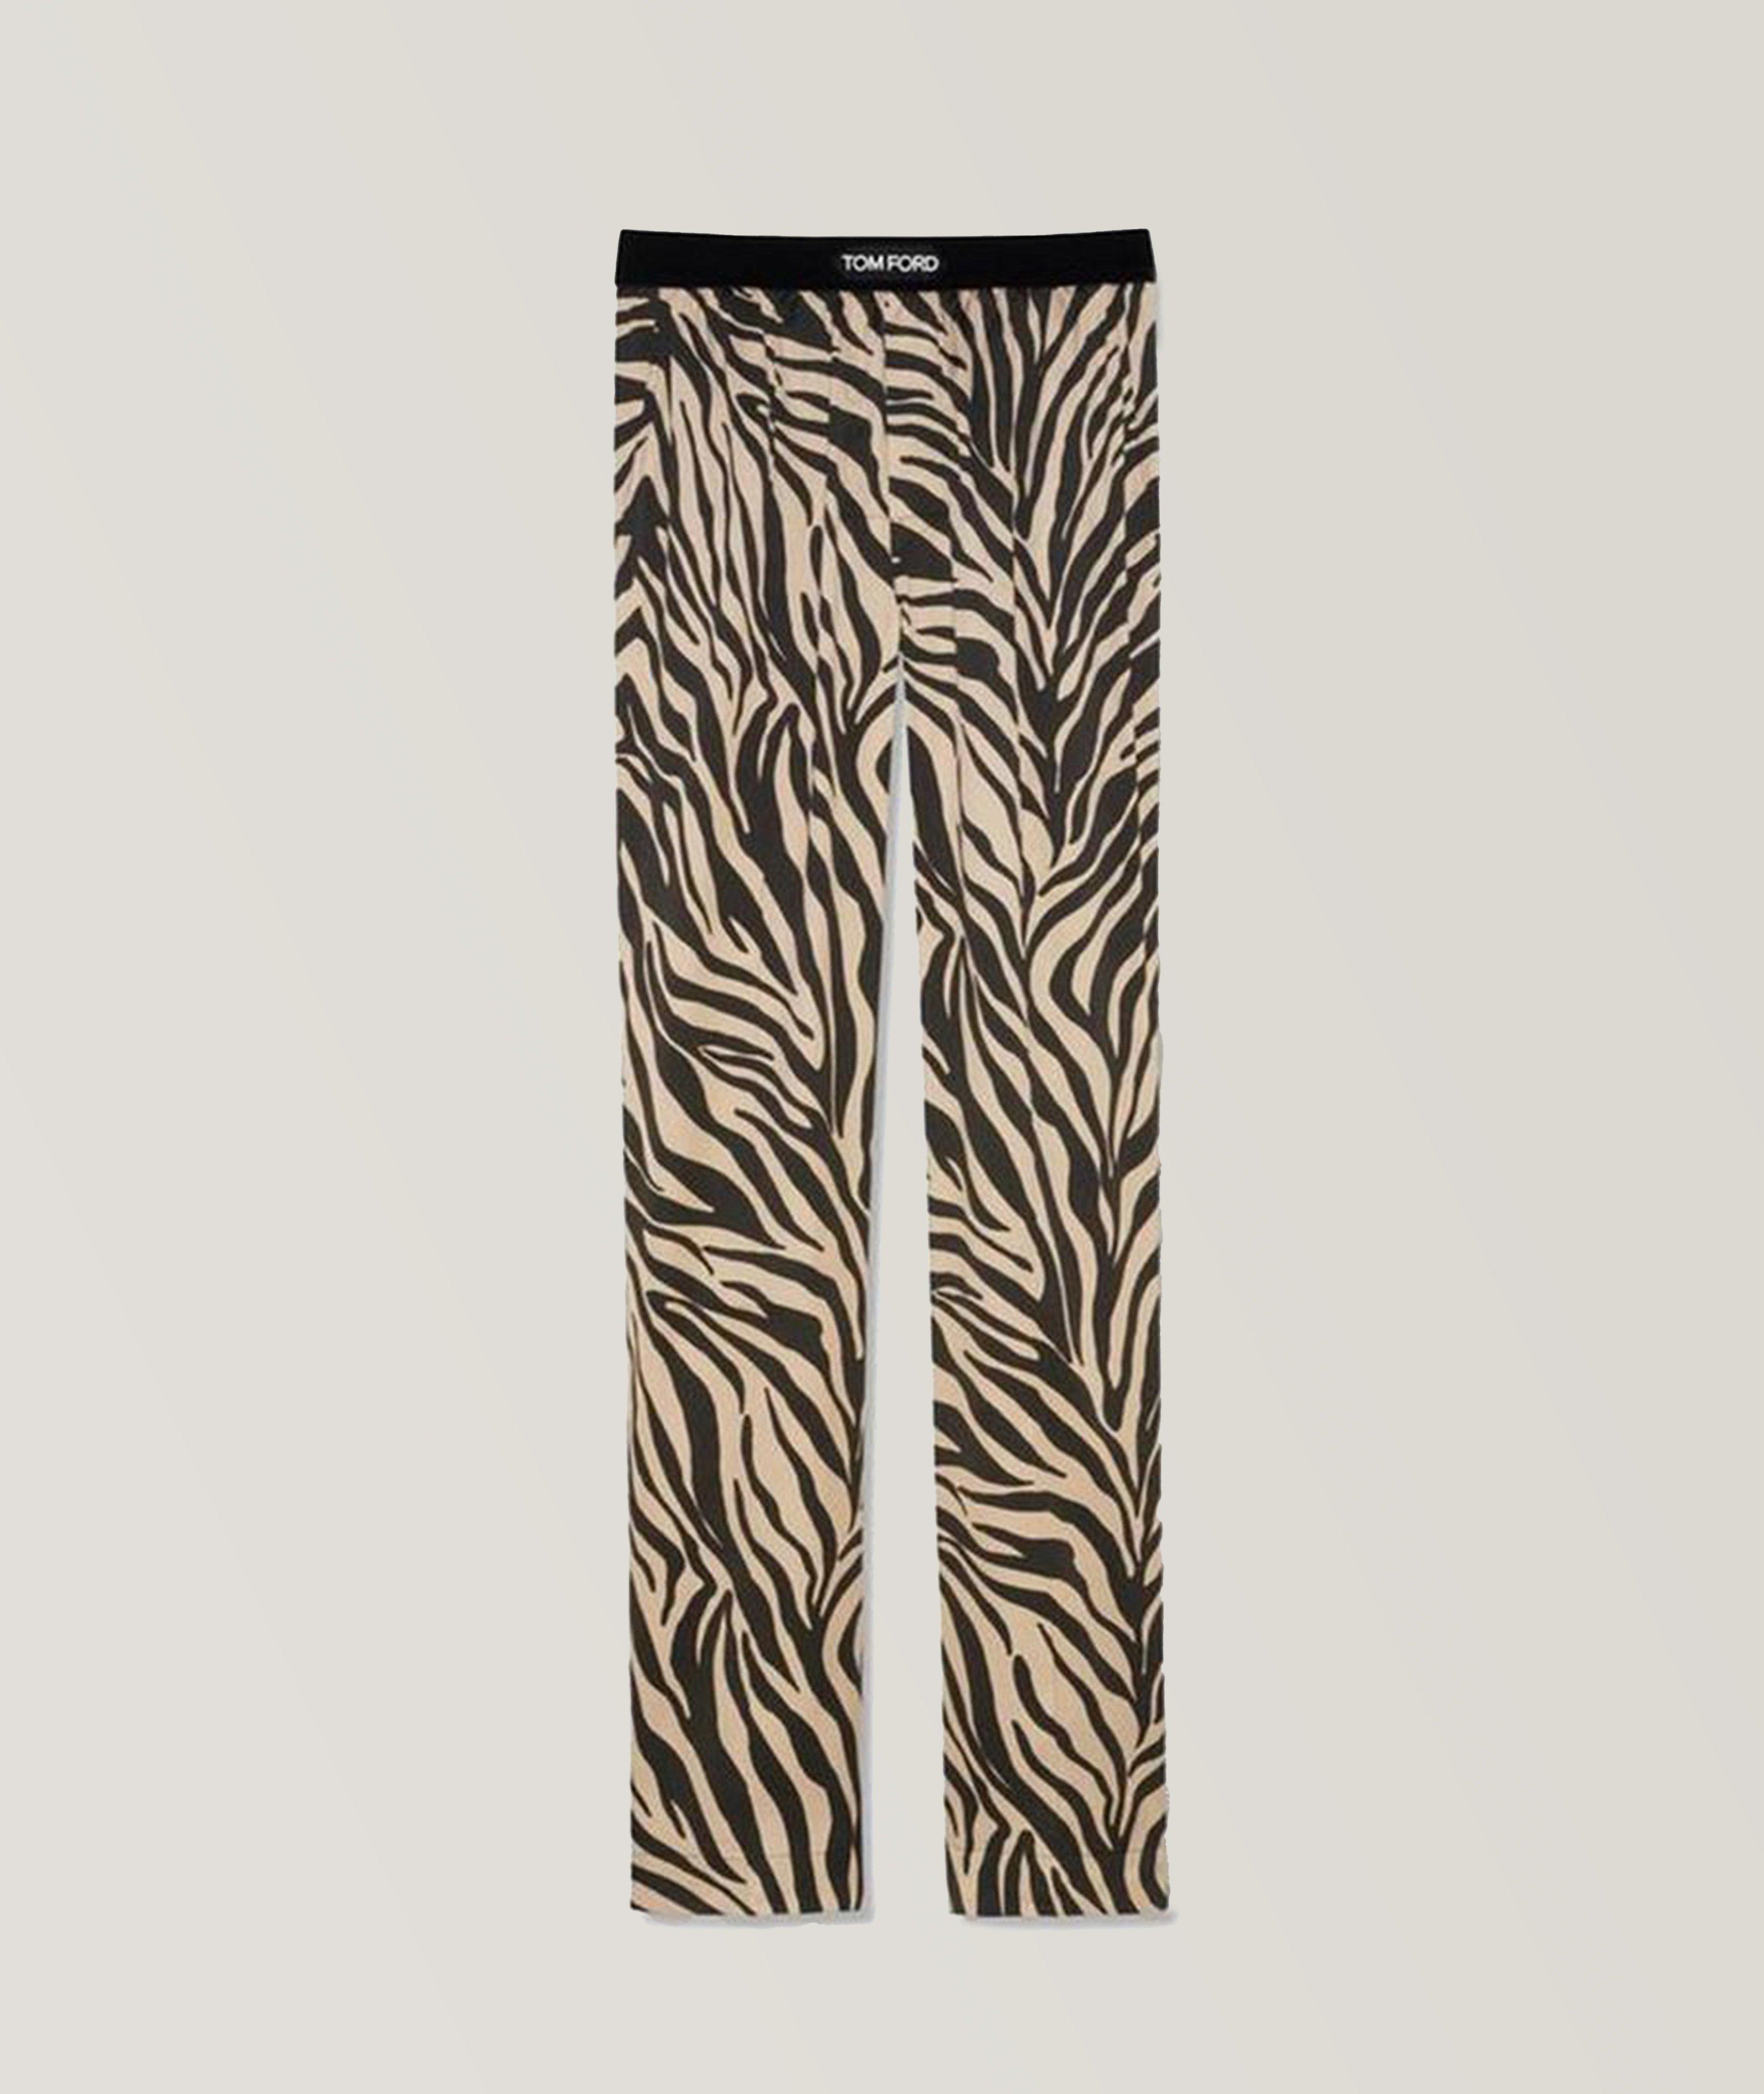 TOM FORD Zebra Print Silk Pajama Pants | Sleepwear | Harry Rosen